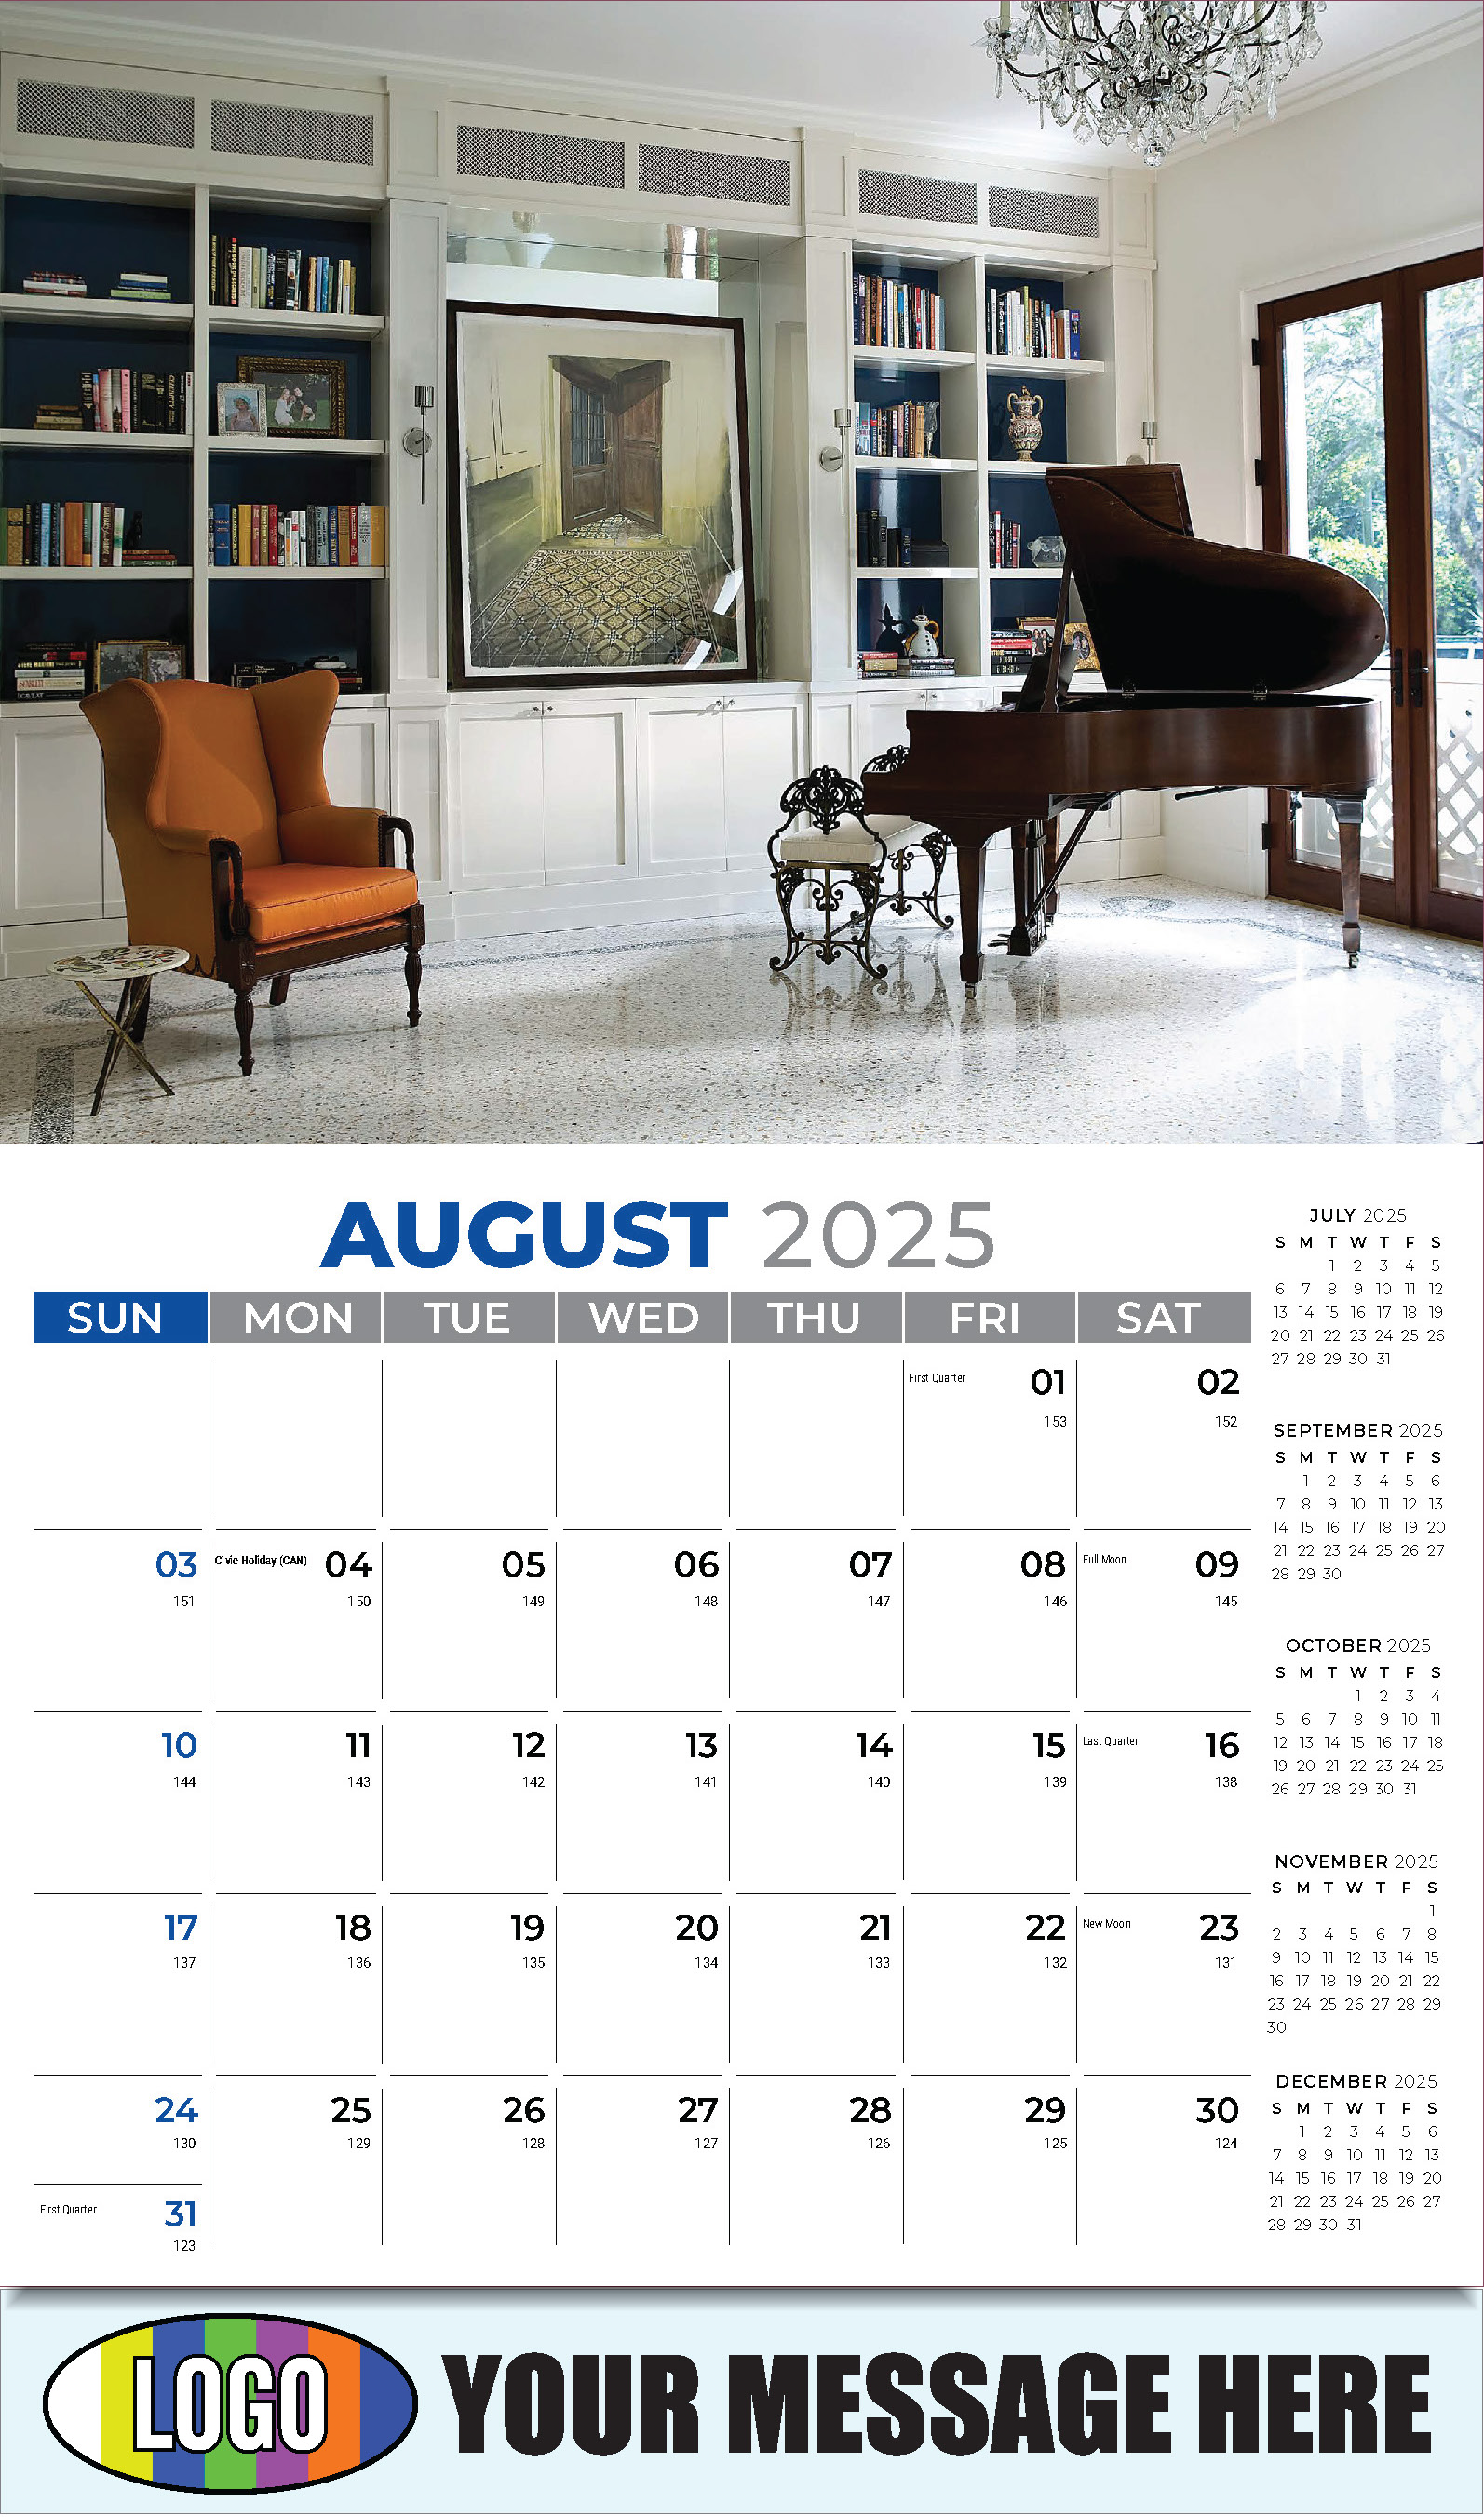 Decor and Design 2025 Interior Design Business Promotional Calendar - August